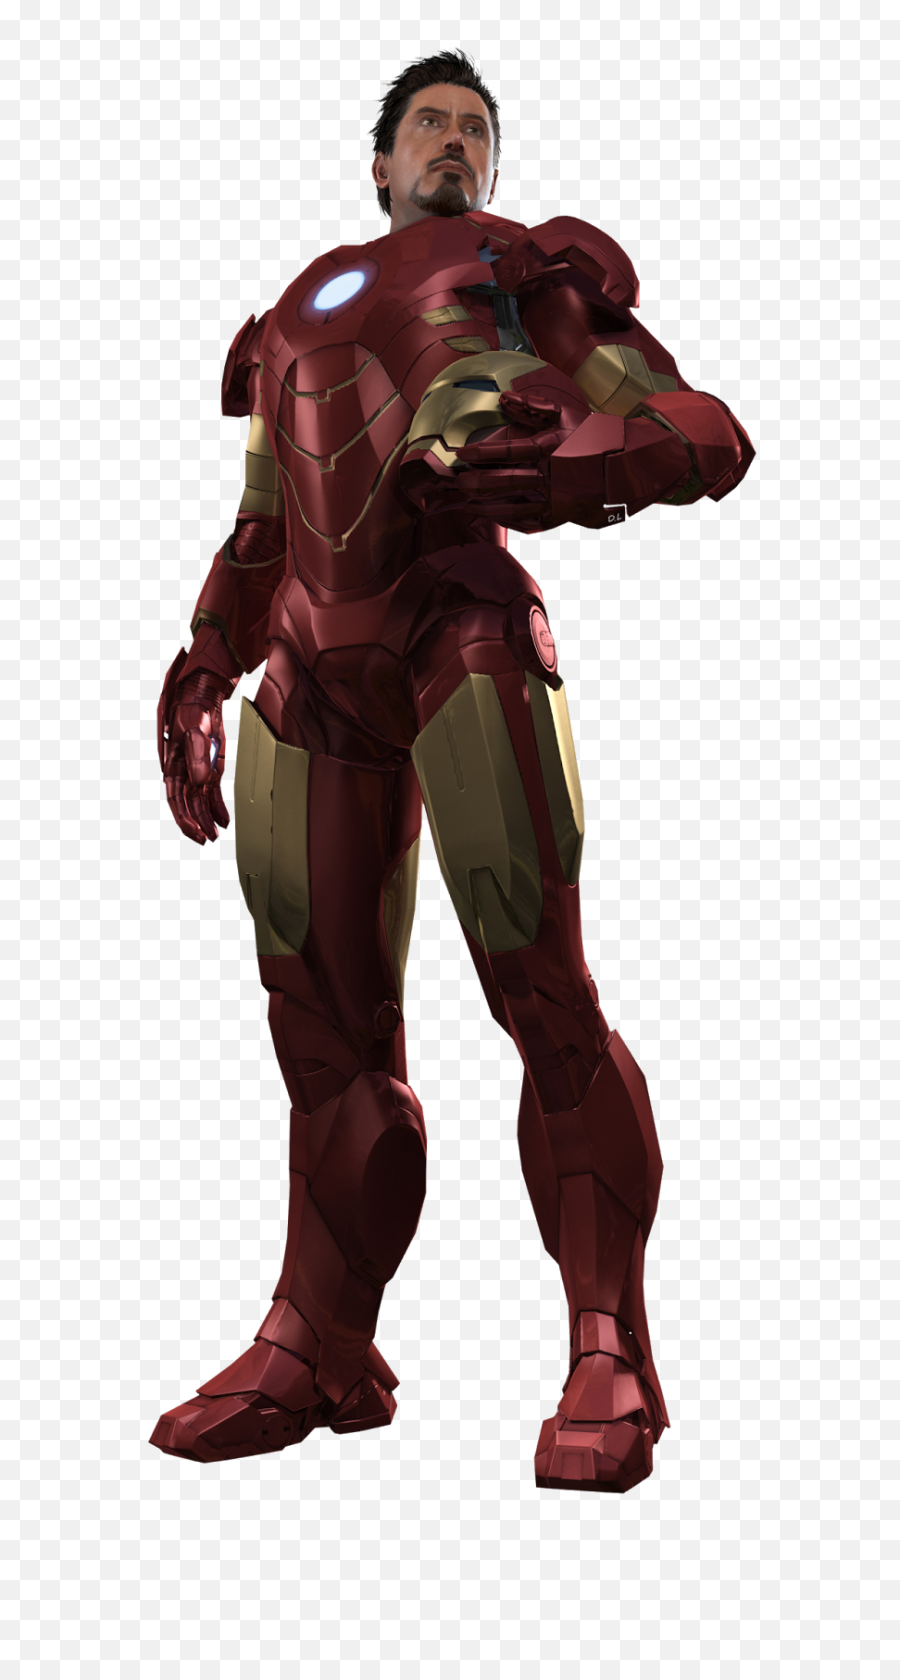 Ironman Avengers Png Image - Purepng Free Transparent Cc0 Tony Stark Iron Man 2 Game,Avengers Png